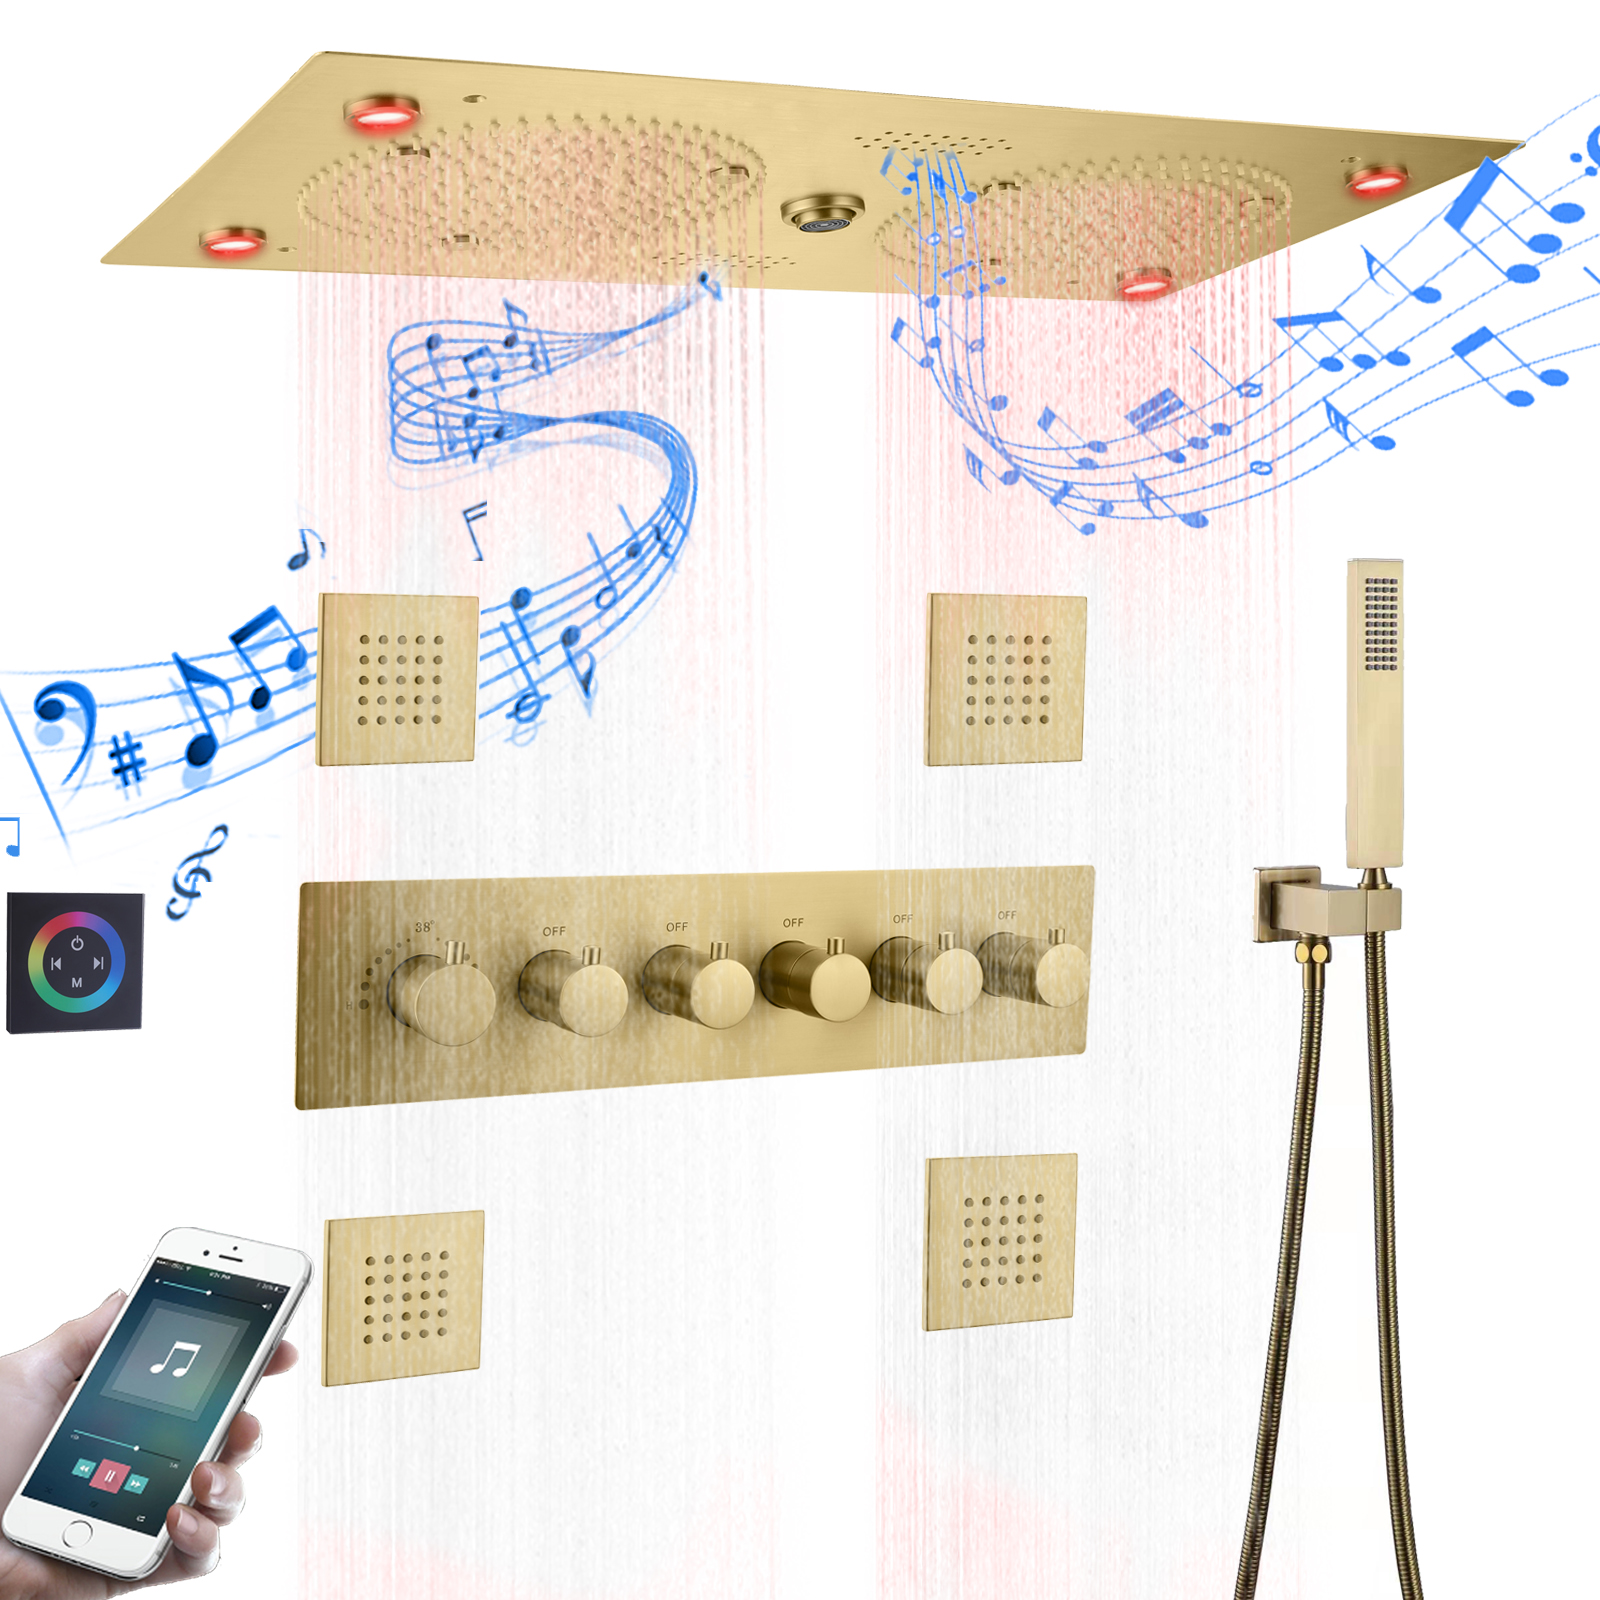 Music Shower Set Brushed Gold Shower Column Rain Mist Multifunction LED Shower Faucet Thermostatic Mixing Valve